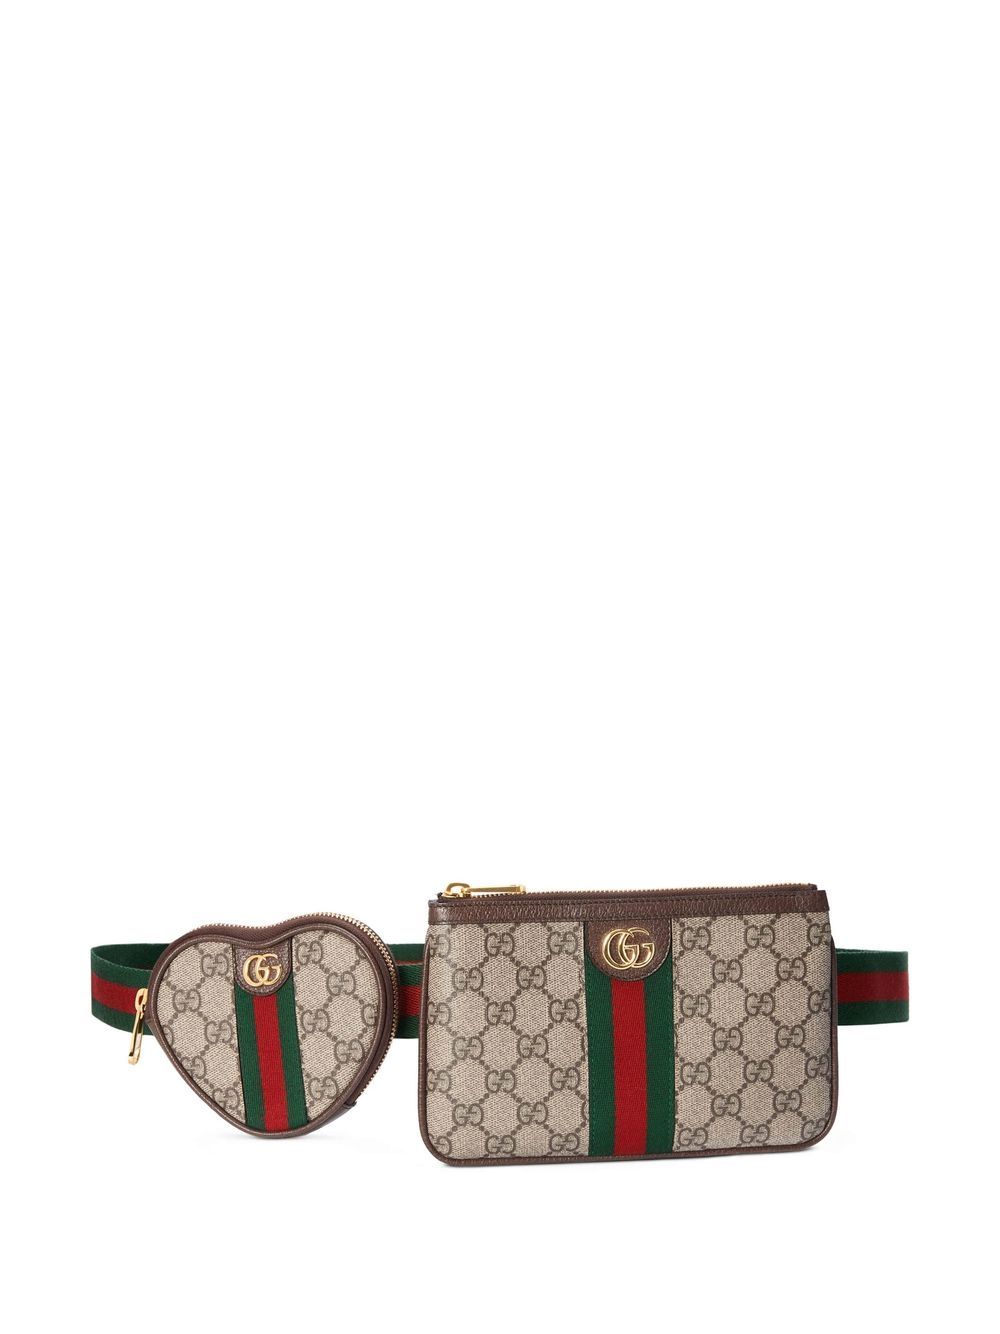 Gucci Ophidia GG Supreme belt bag